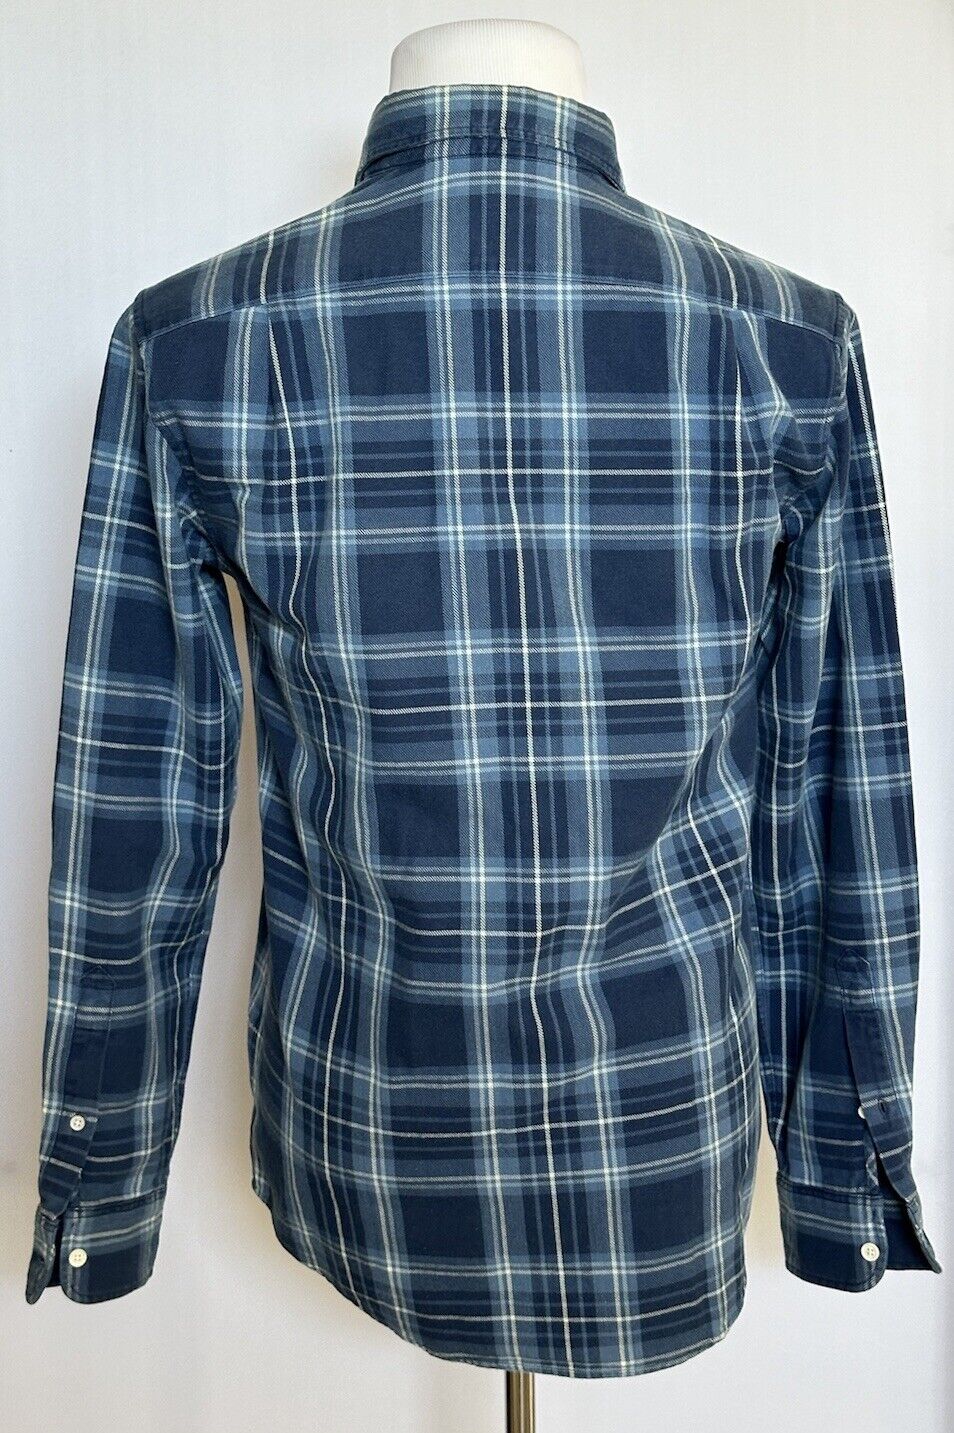 Ralph Lauren Purple Label Blue Men's Cotton Shirt S Made in Portugal NWT $495